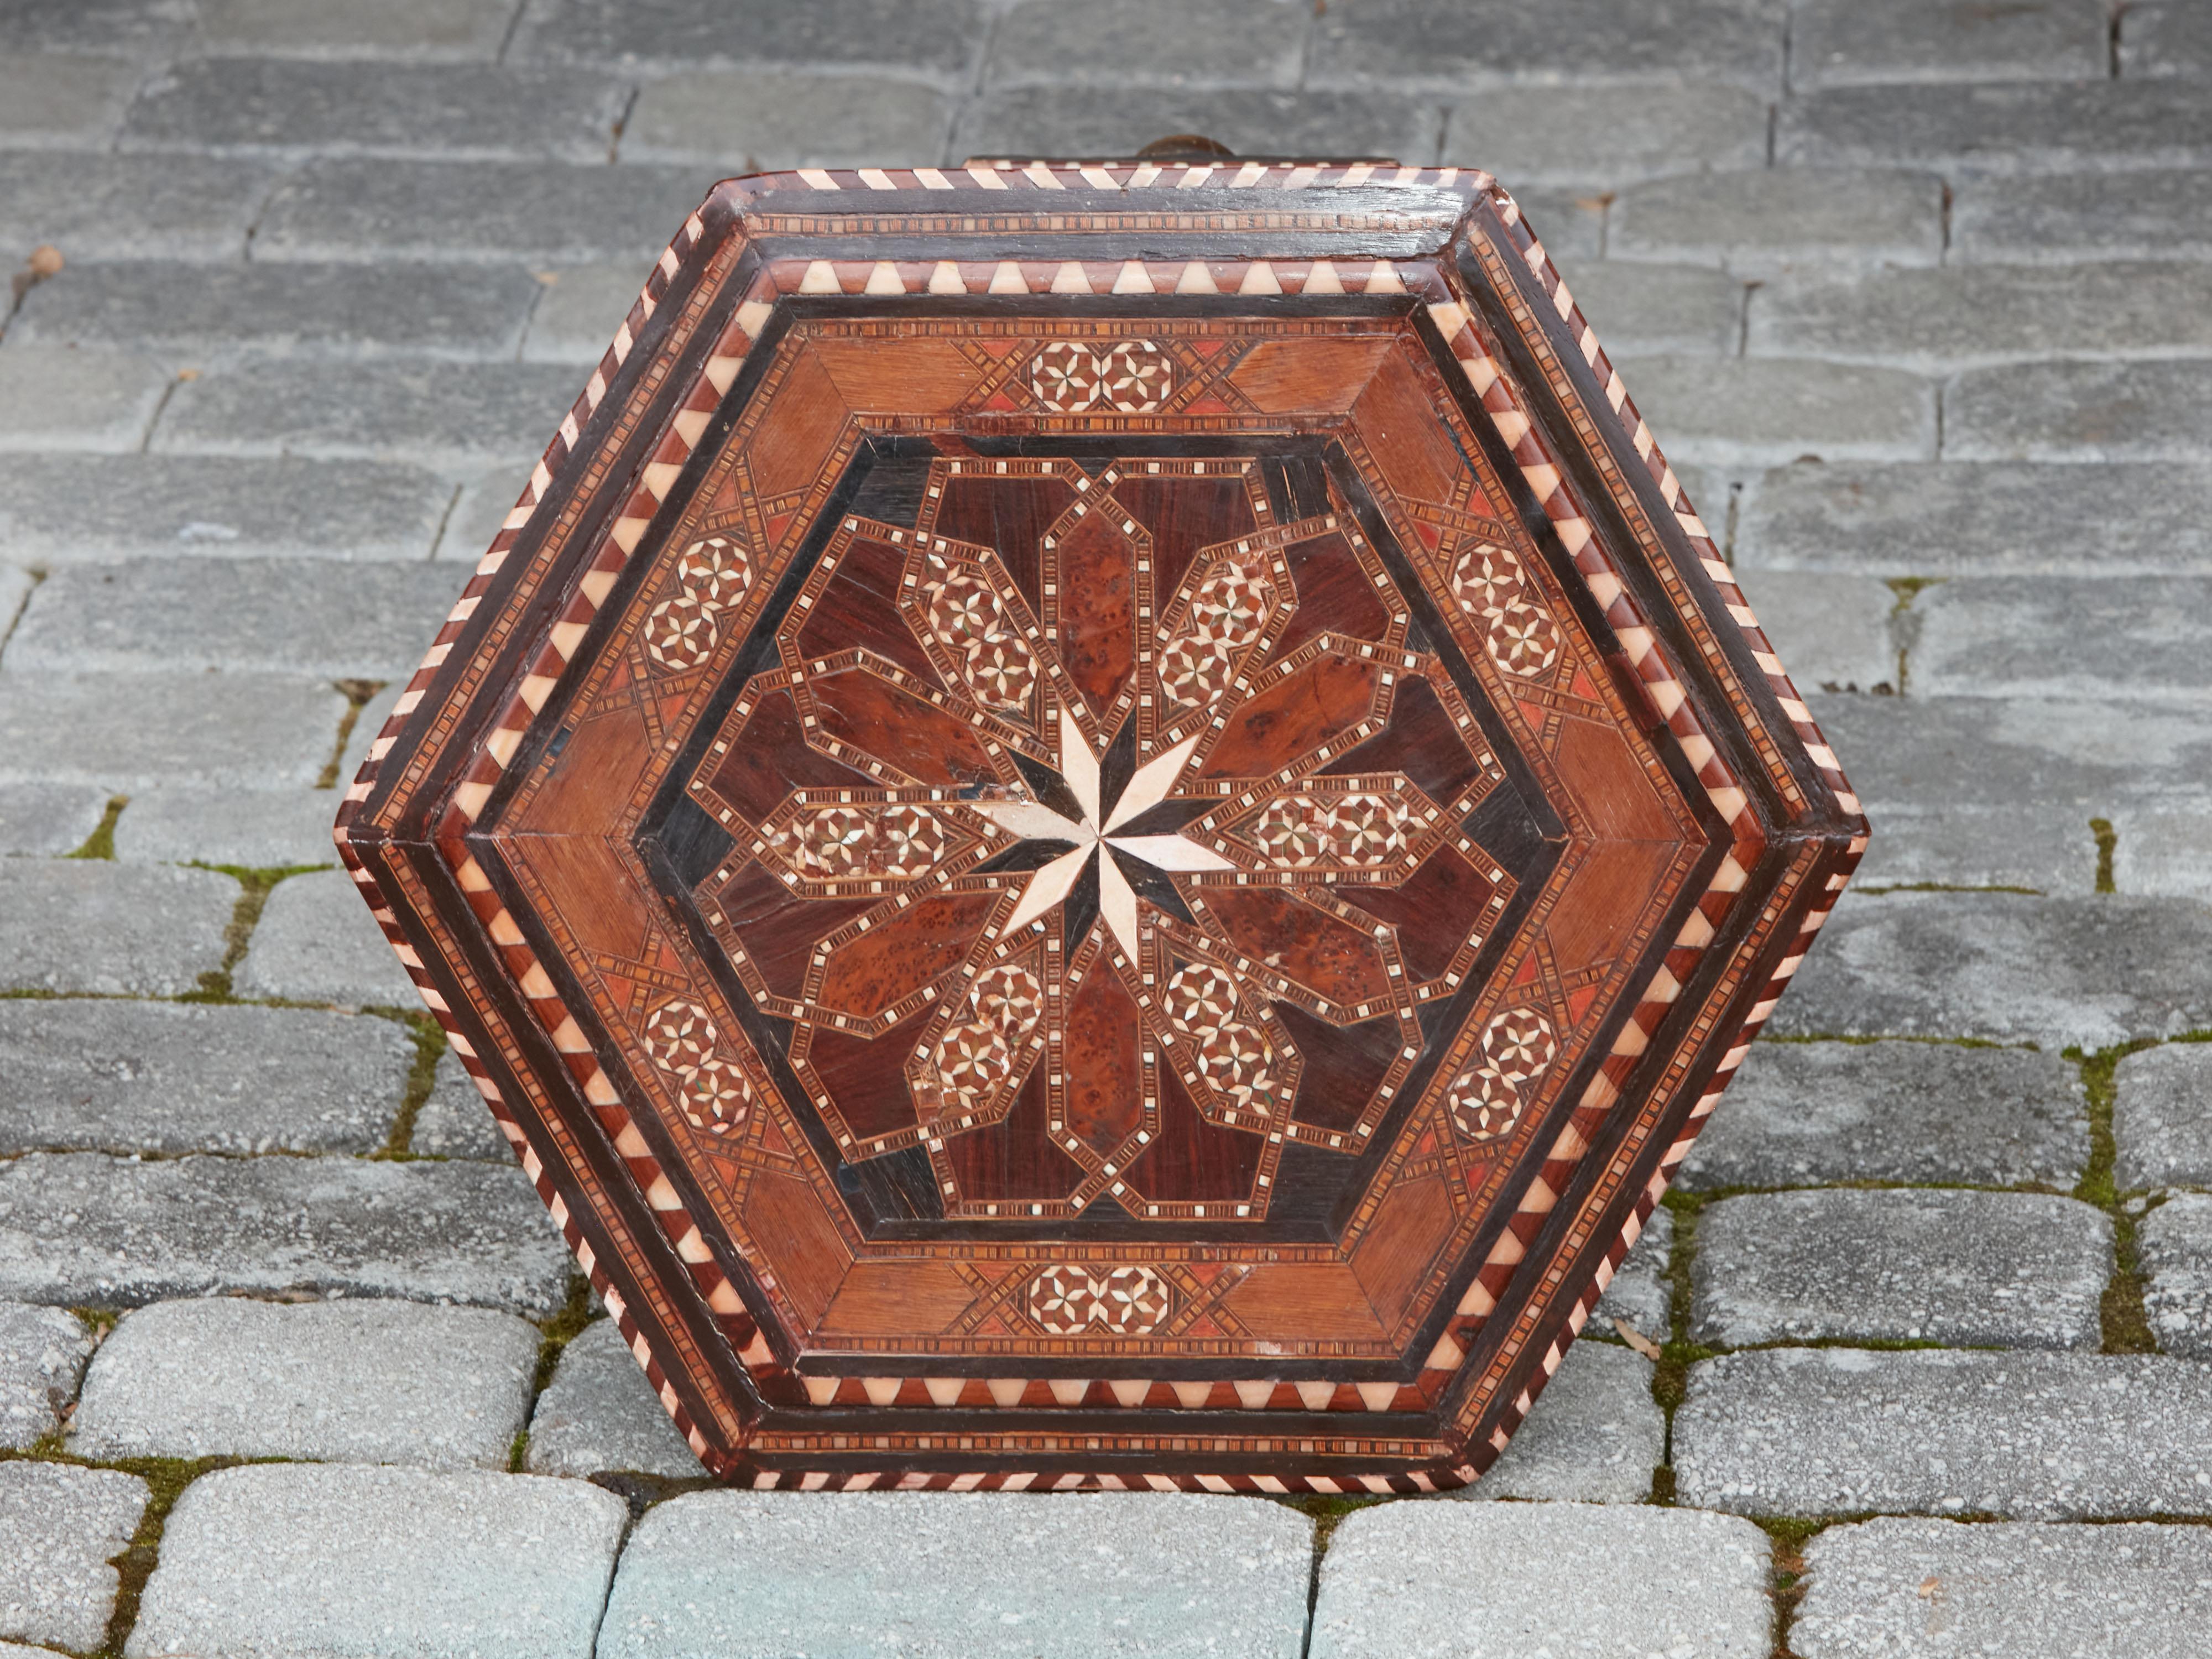 20th Century Moroccan Midcentury Hexagonal Guéridon Side Table with Geometric Inlaid Motifs